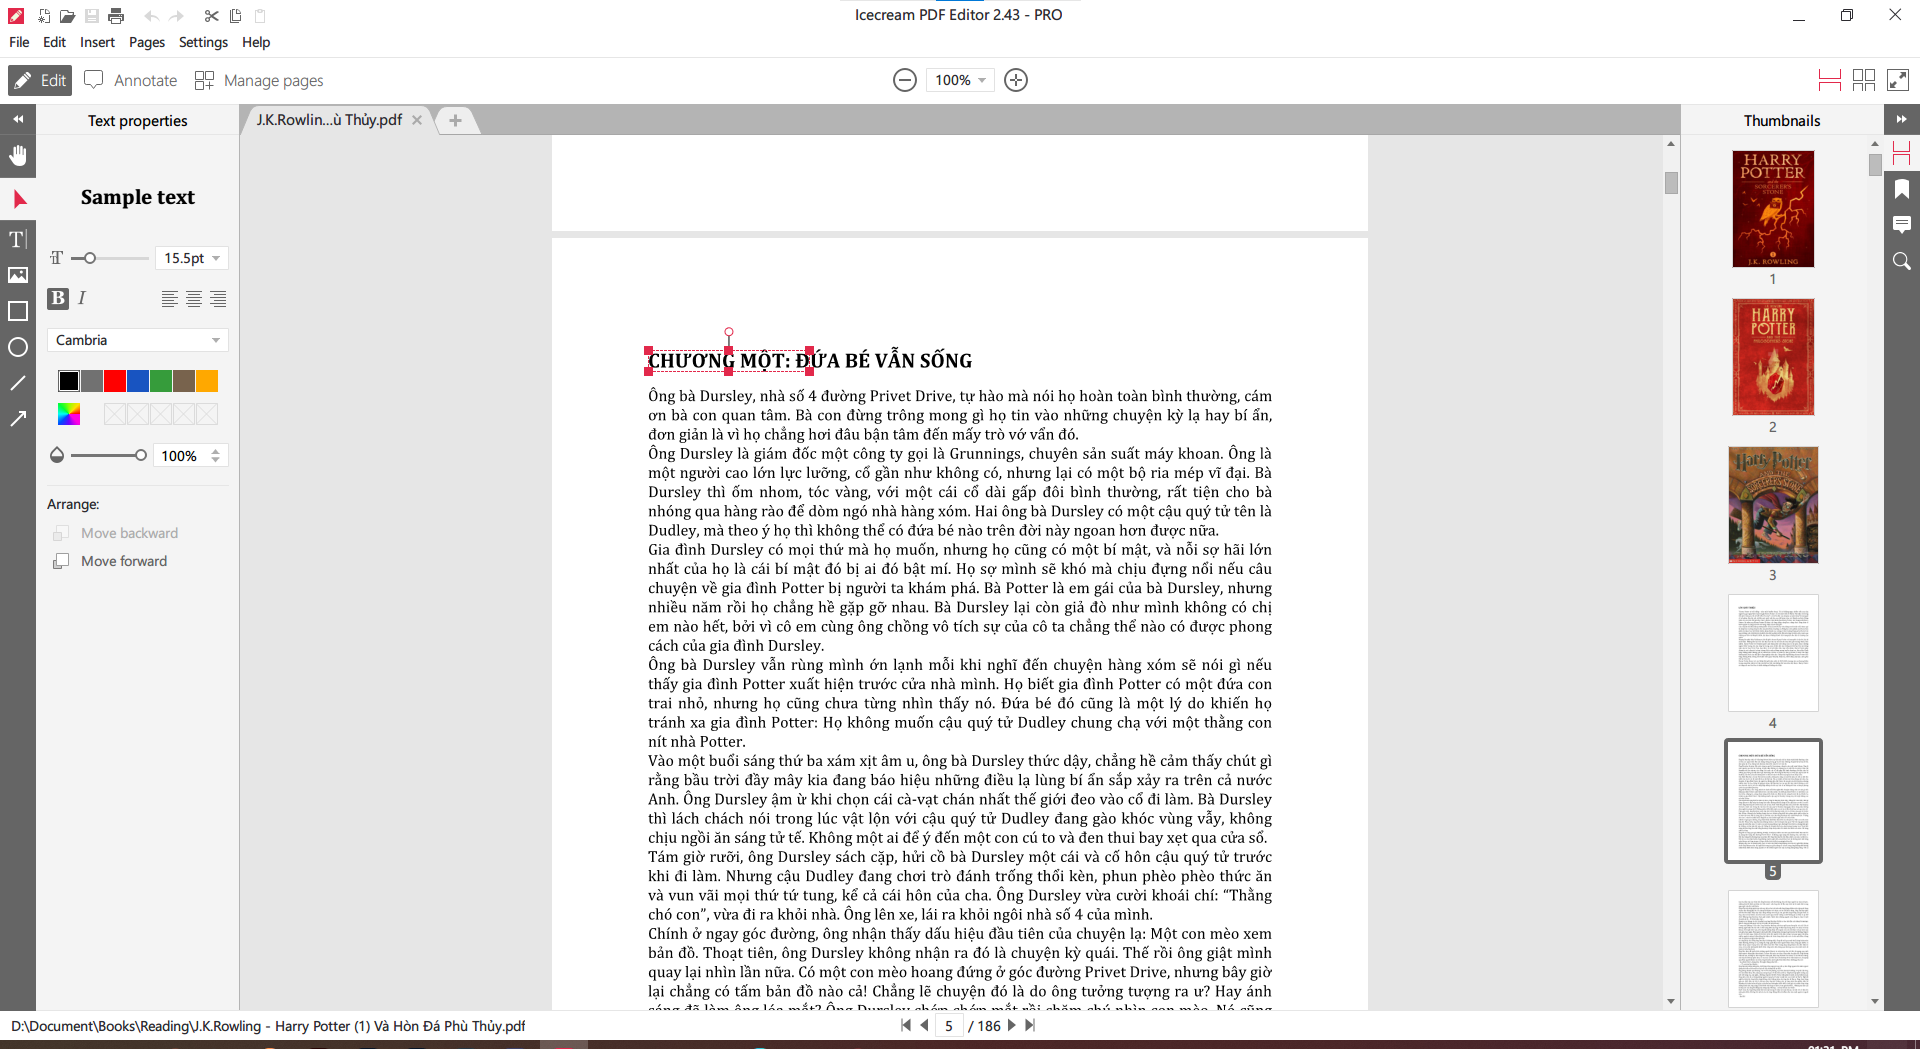 Icecream PDF Editor Pro 2.72 for ios download